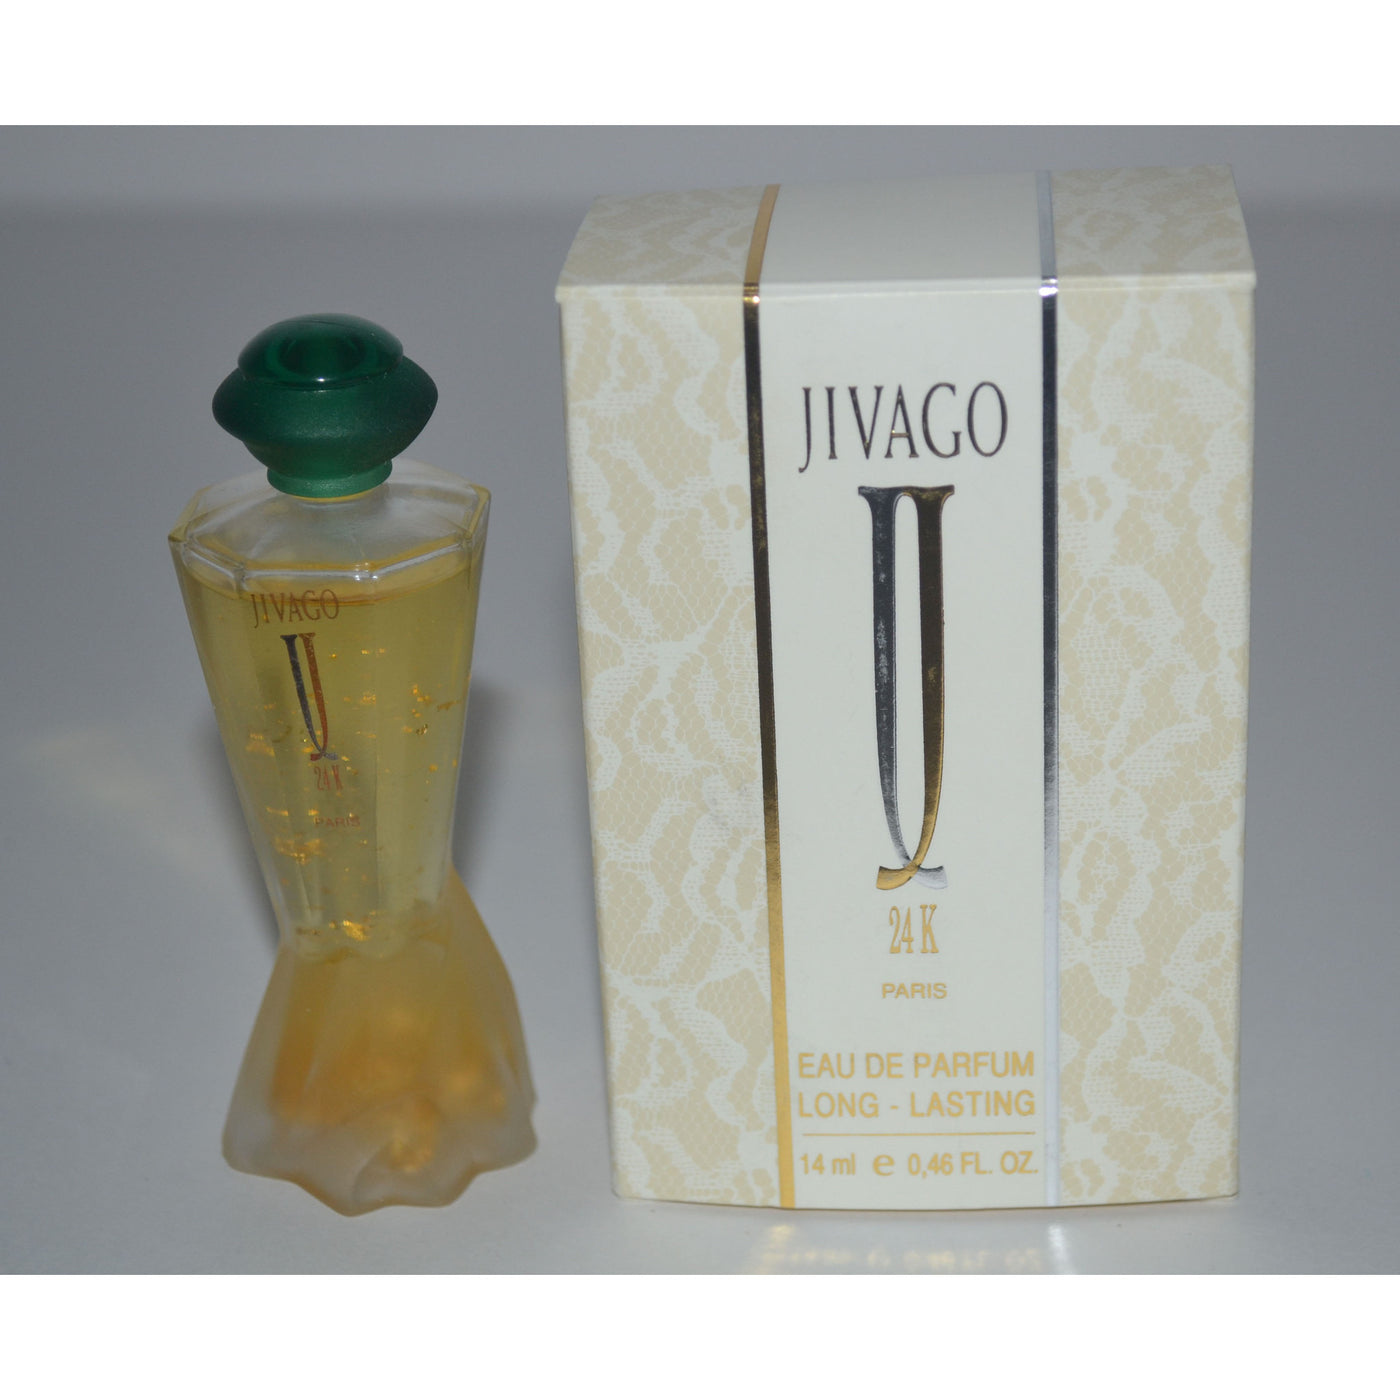 Vintage Jivago 24K Eau De Parfum